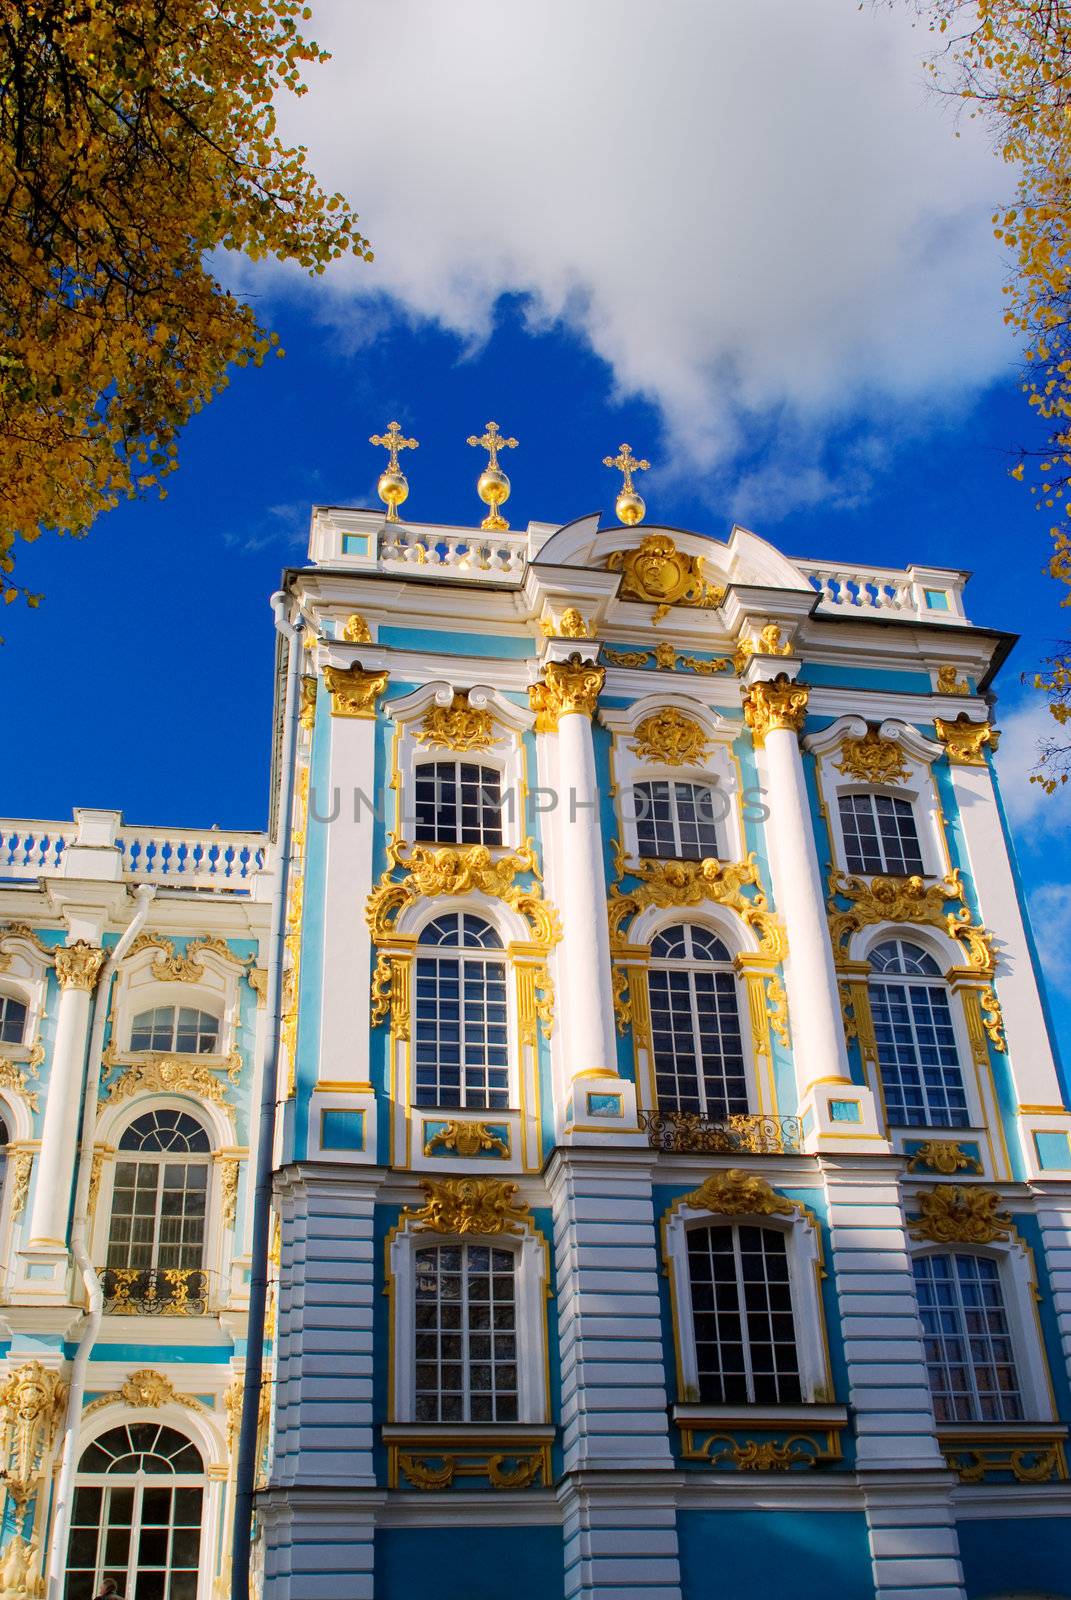 Pushkin's palace in Tsarskoe selo in autumn by BIG_TAU